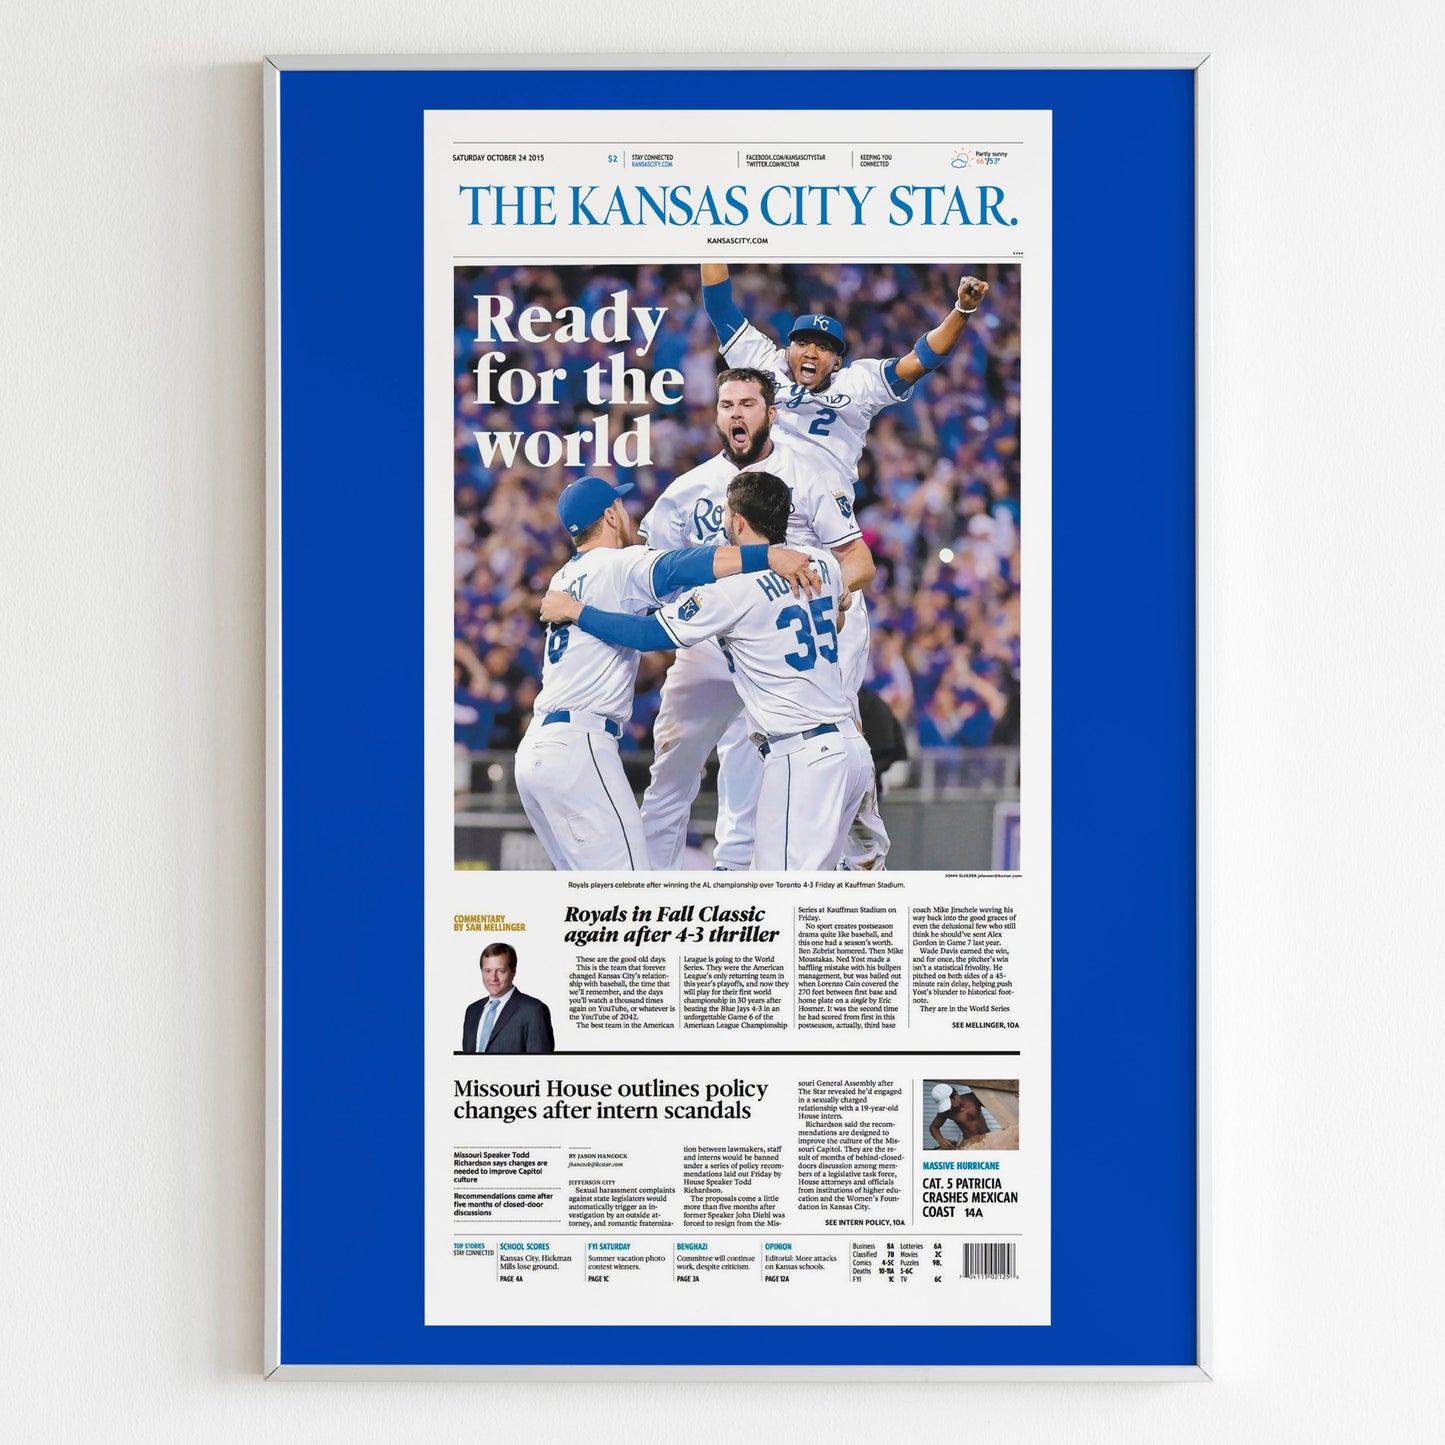 Kansas City Royals 2015 World Series MLB Champions Front Cover The Kansas City Star Newspaper Poster, Baseball Team Print, Wall Poster